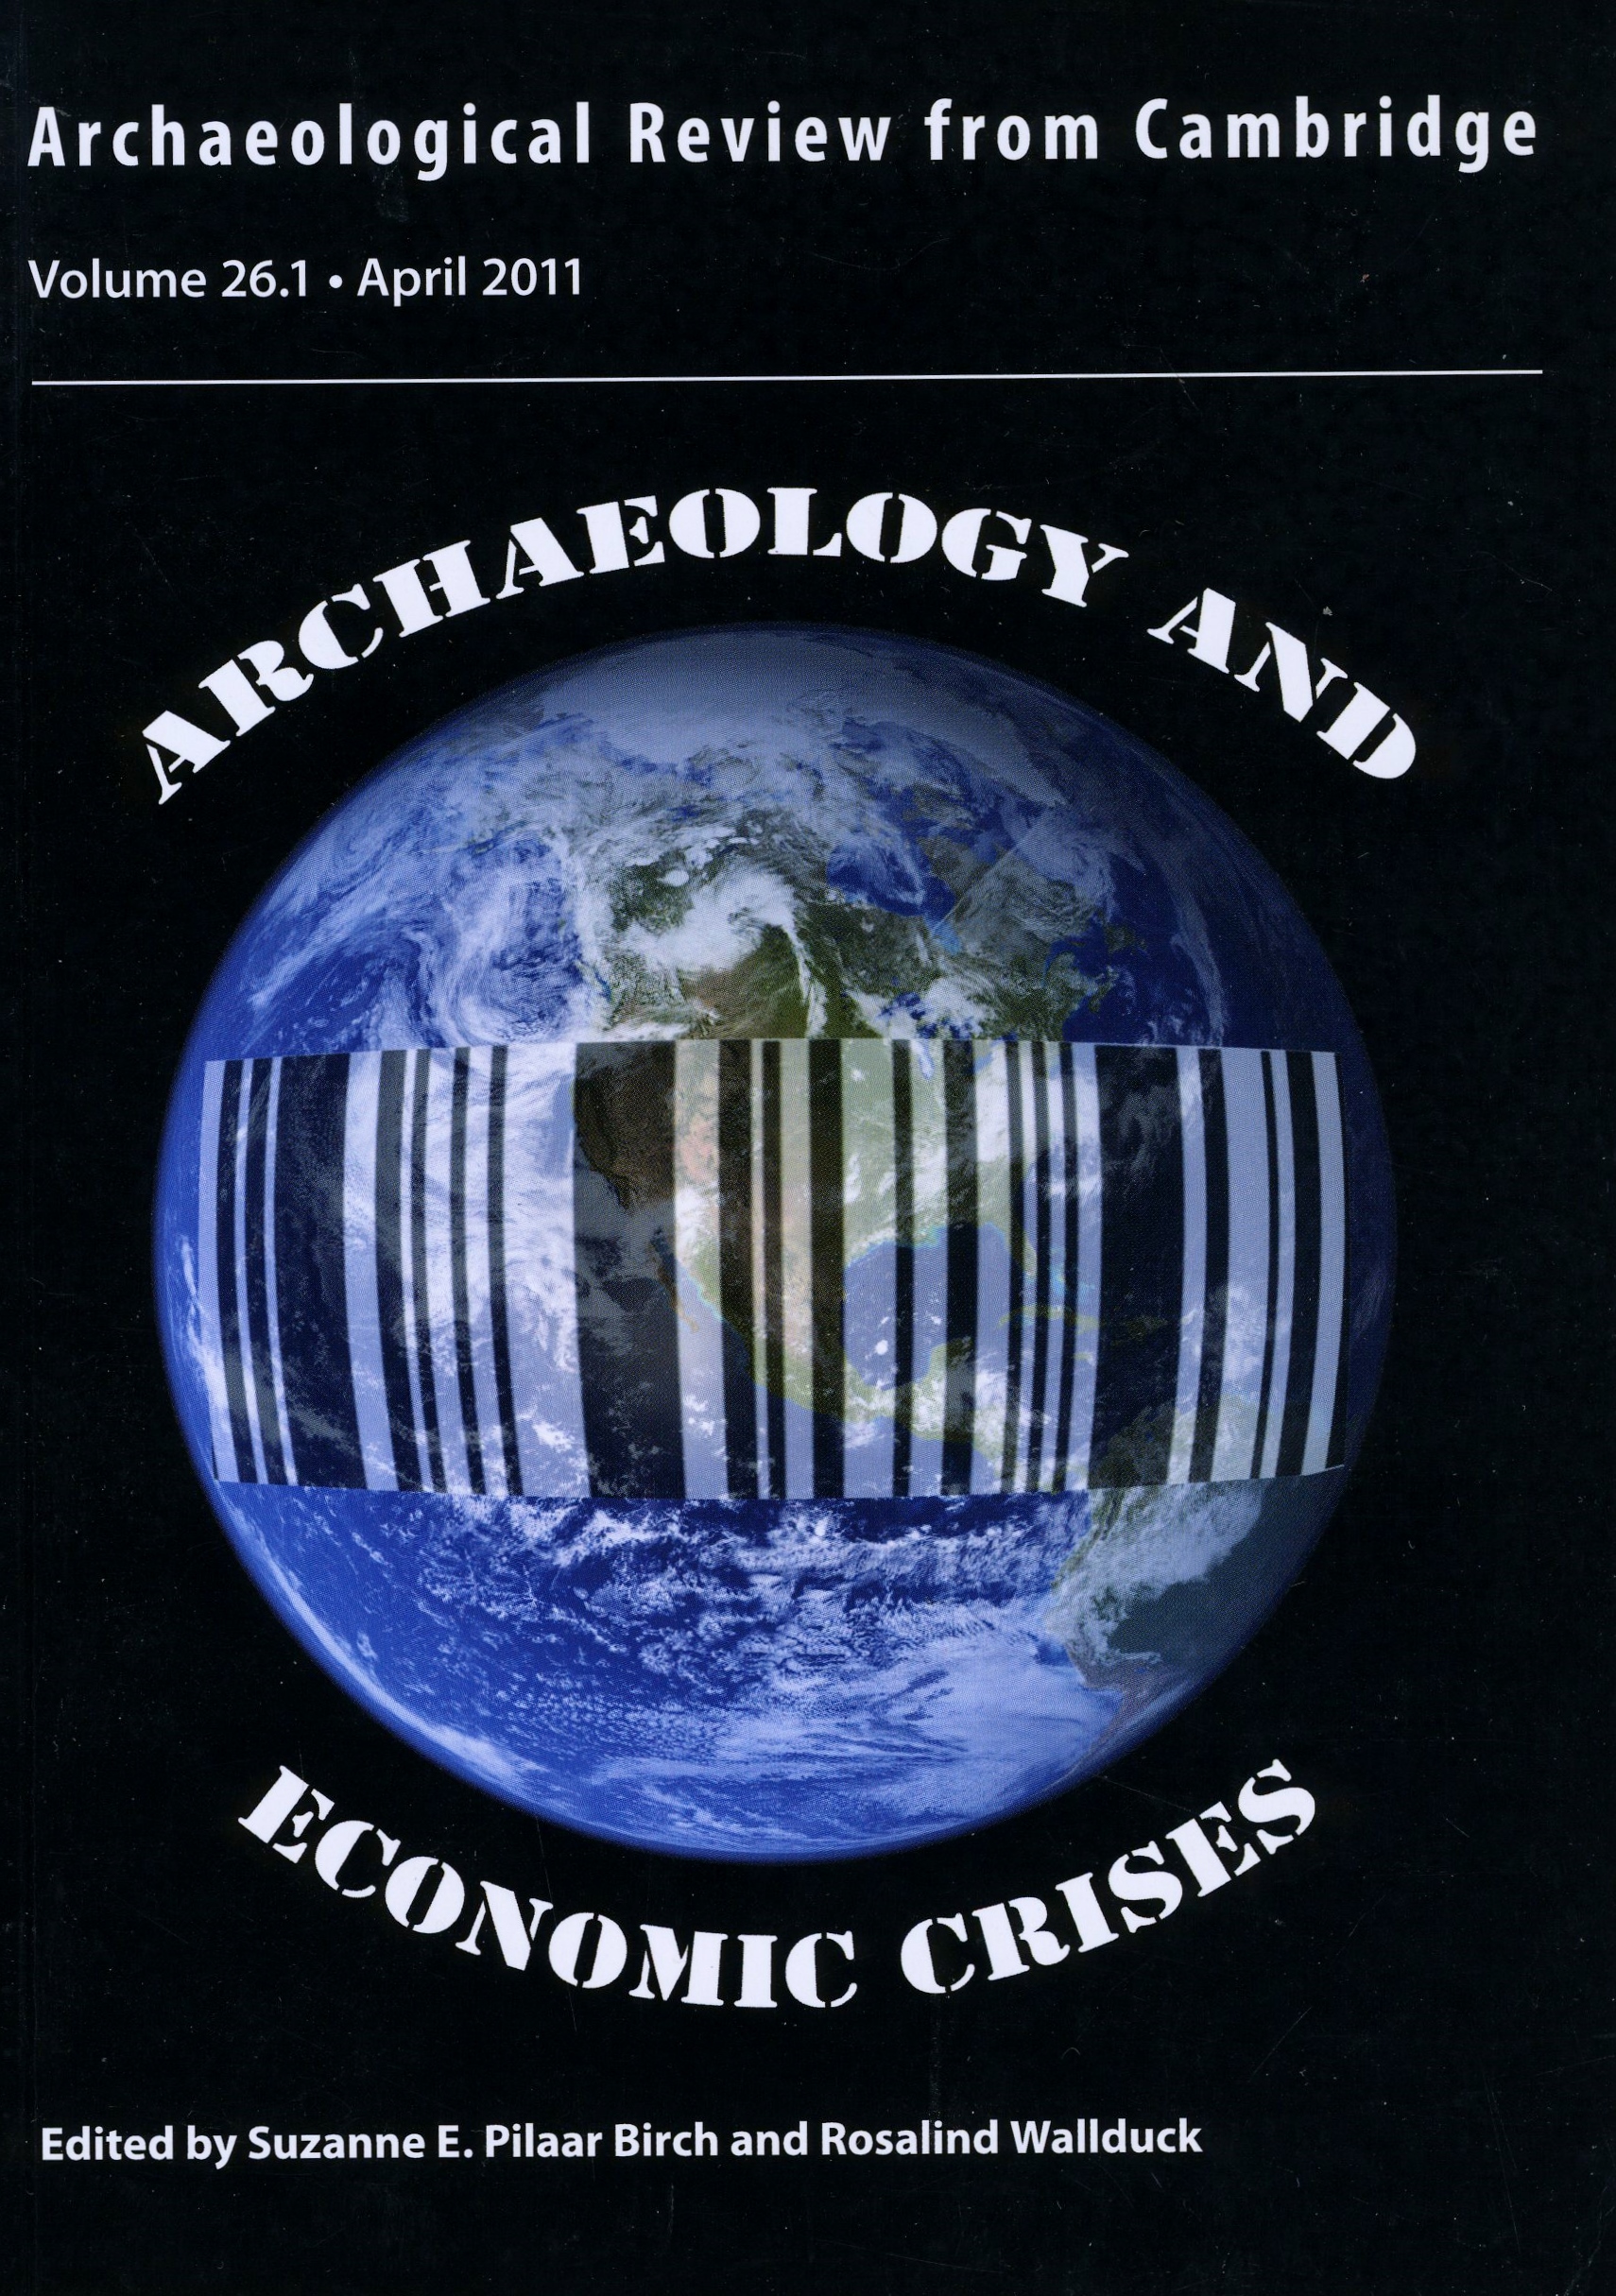 Archaeology and Economic Crises